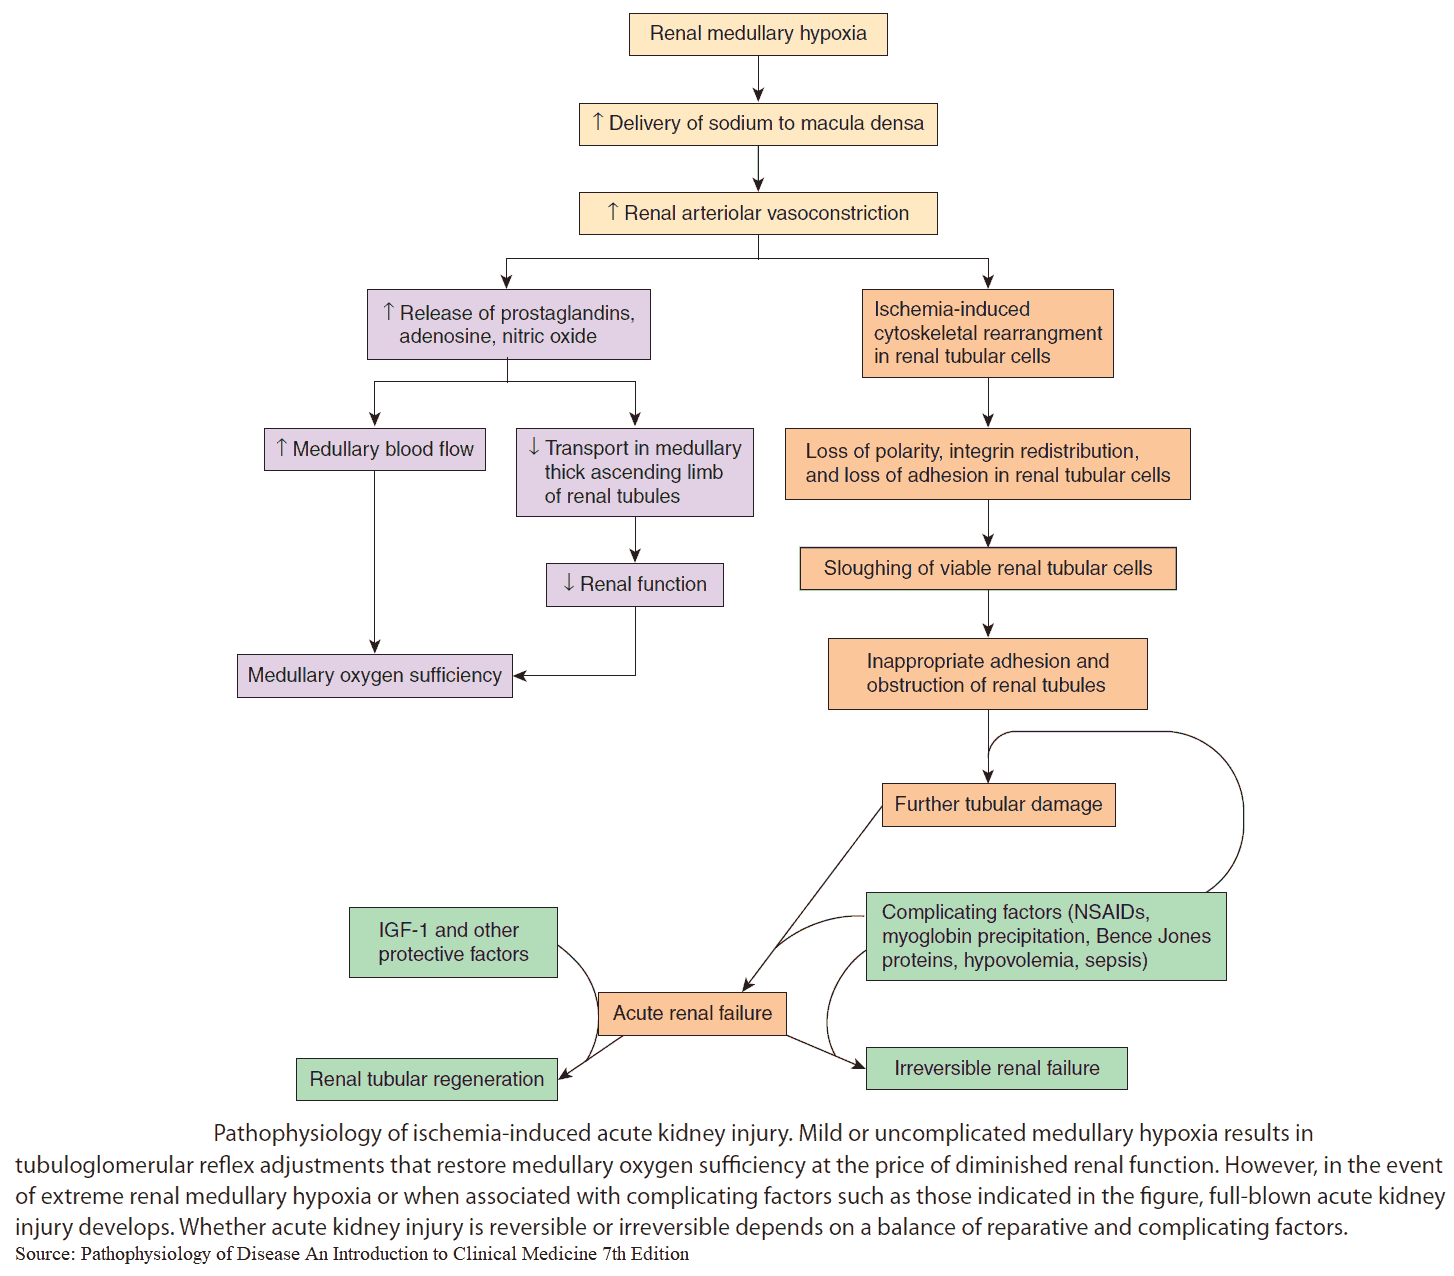 Pathophysiology of ischemia-induced acute kidney injury